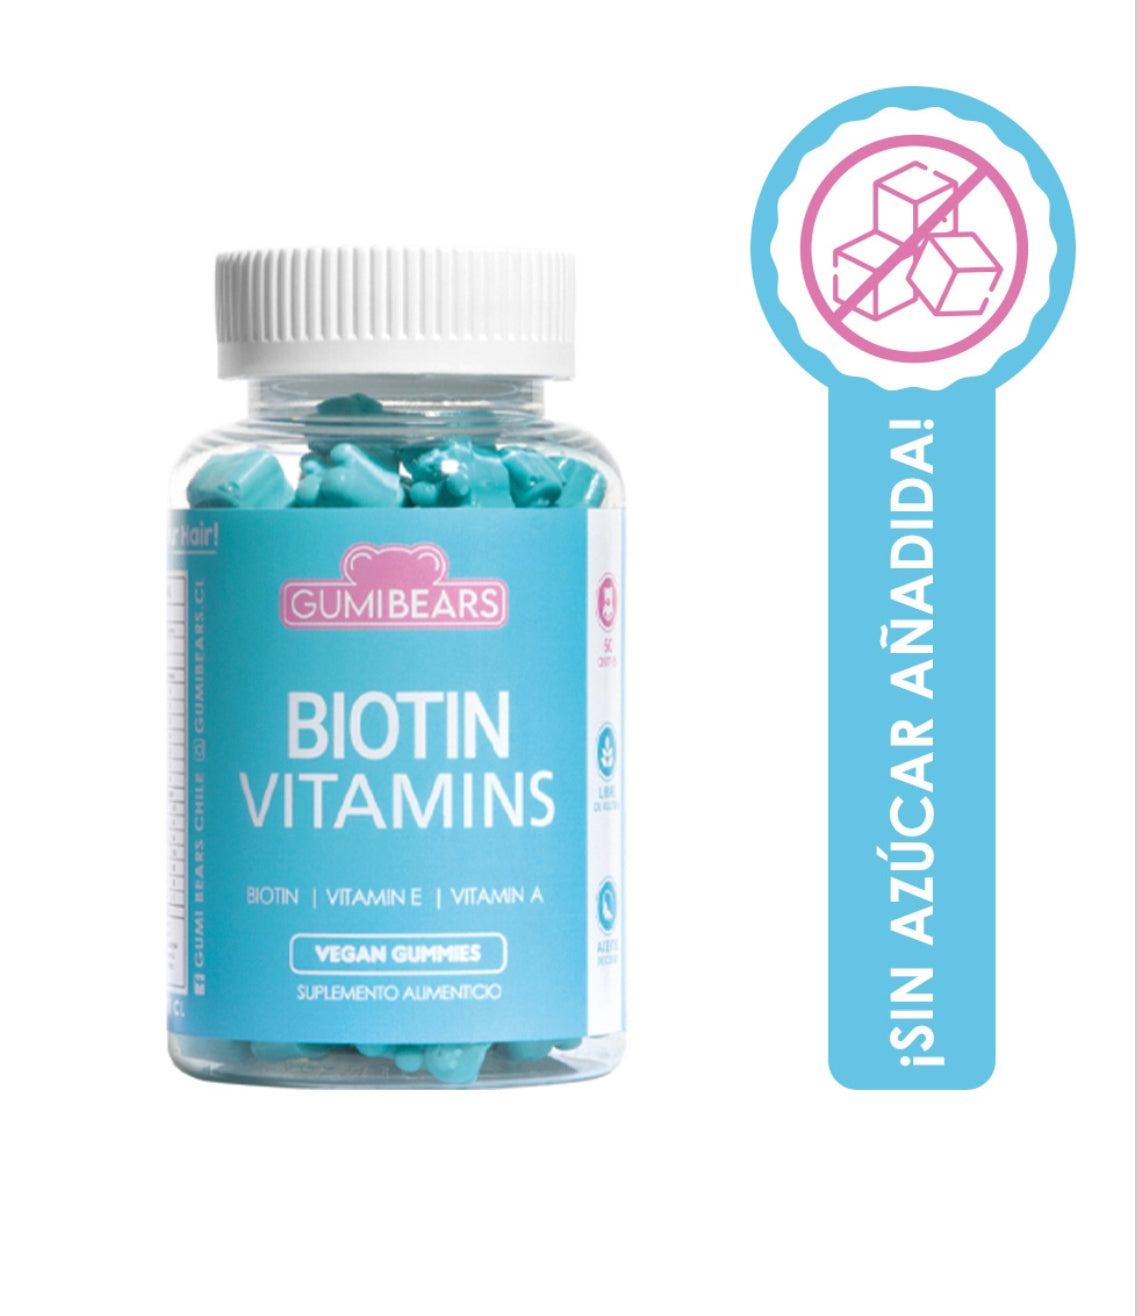 Oferta !“biotin Vitamins de "Gumi bears"